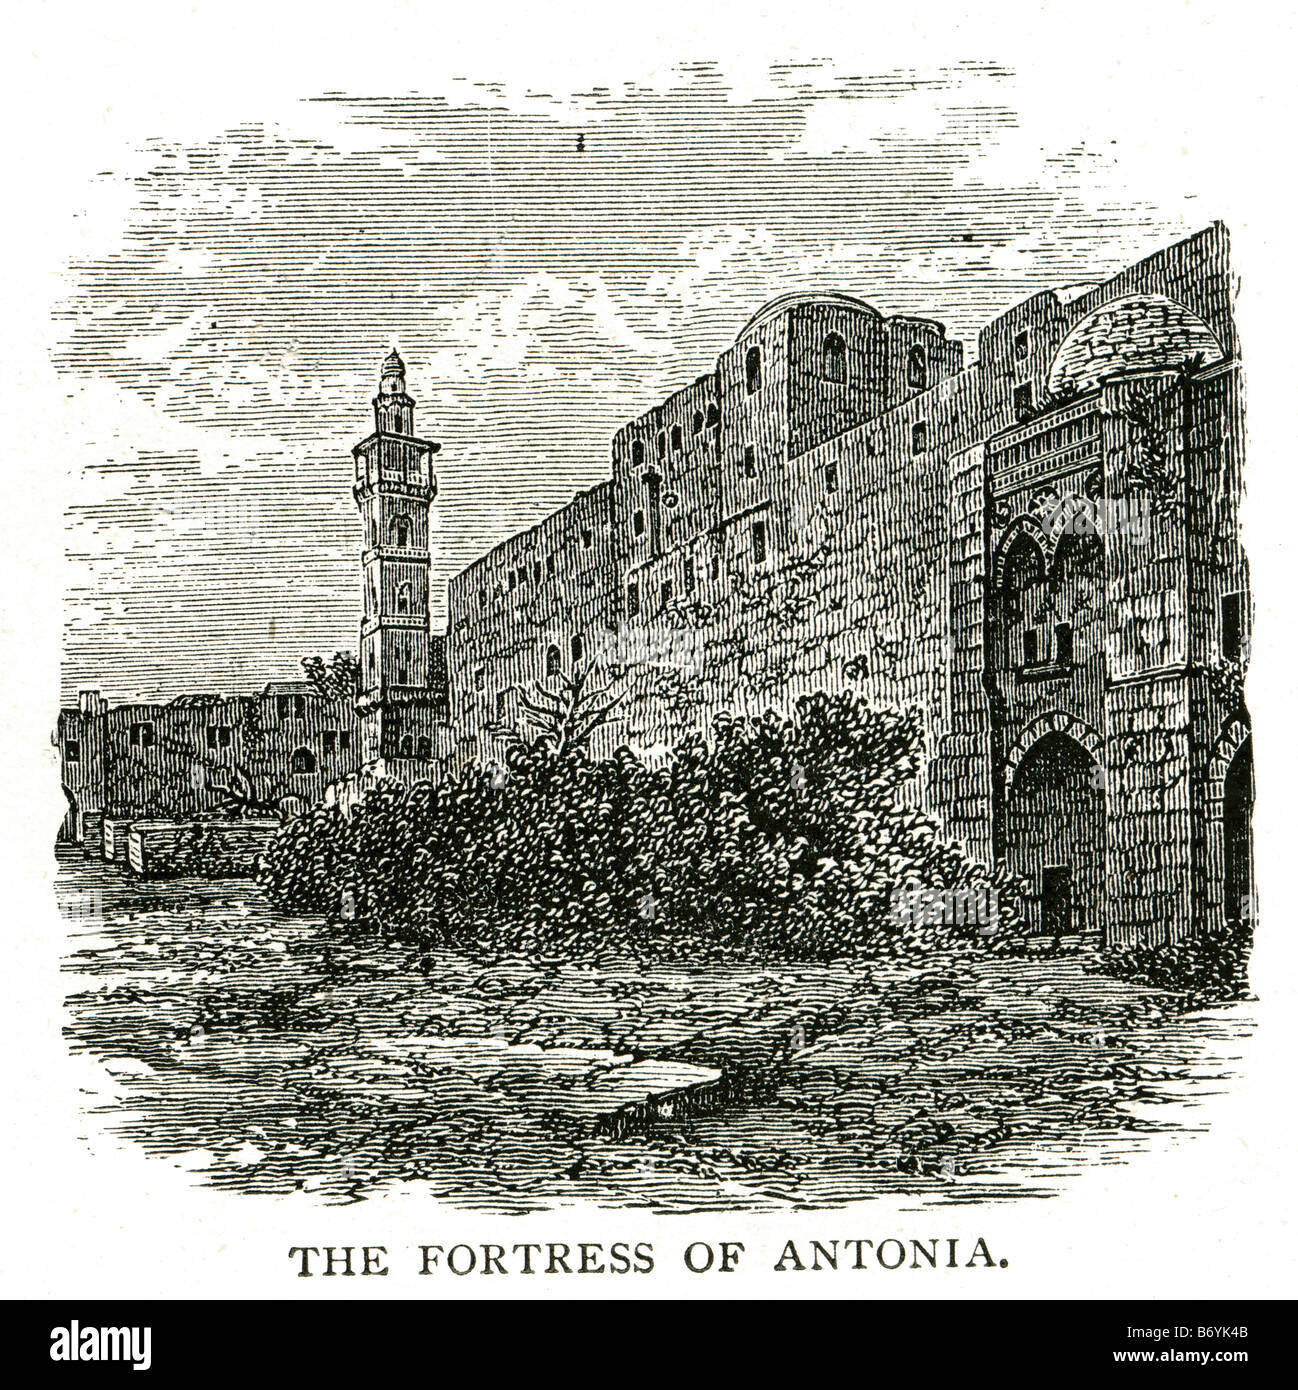 Antonia Fortress - Wikipedia